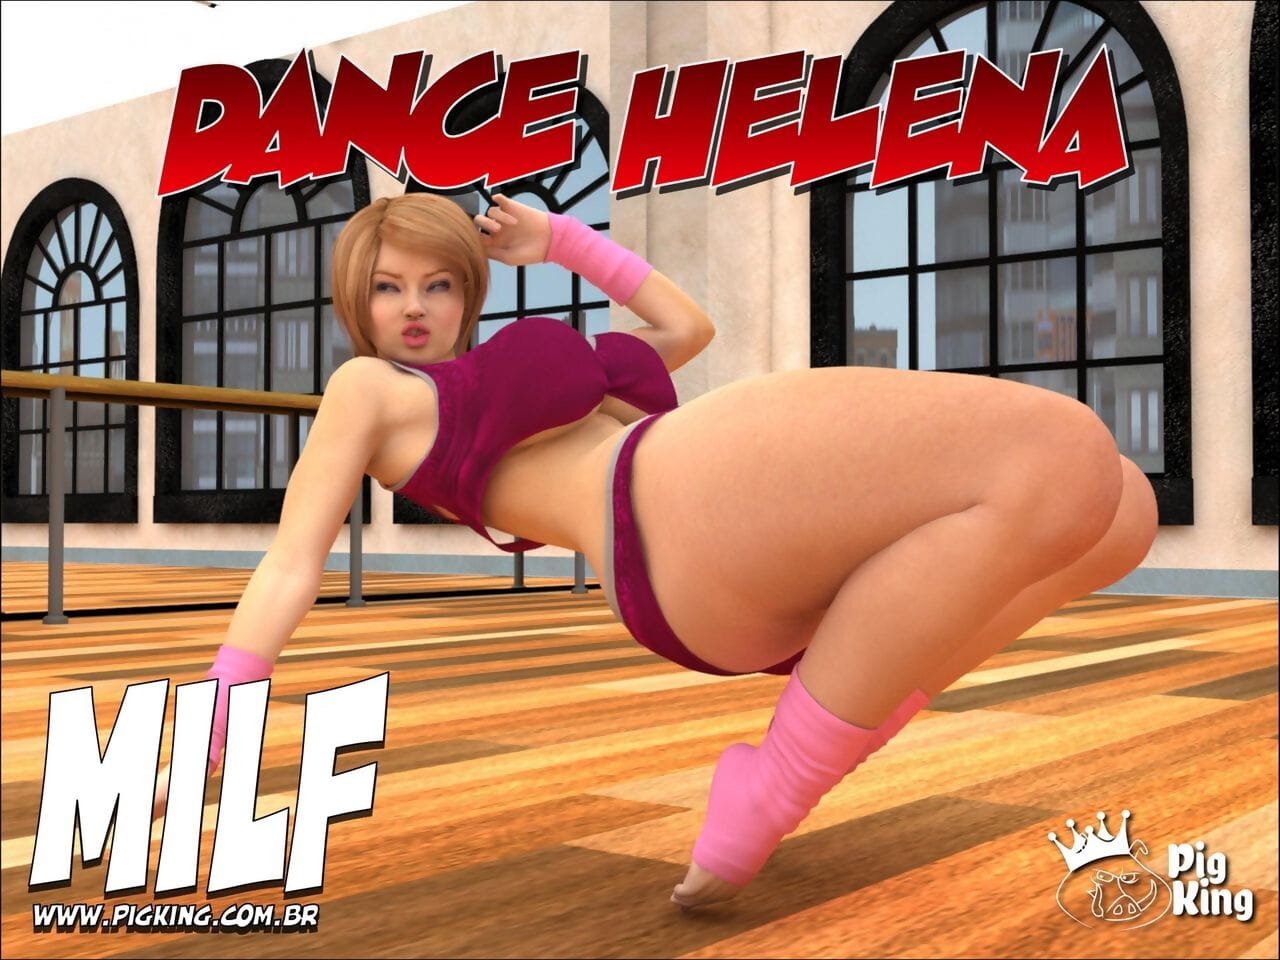 Dance Helena page 1